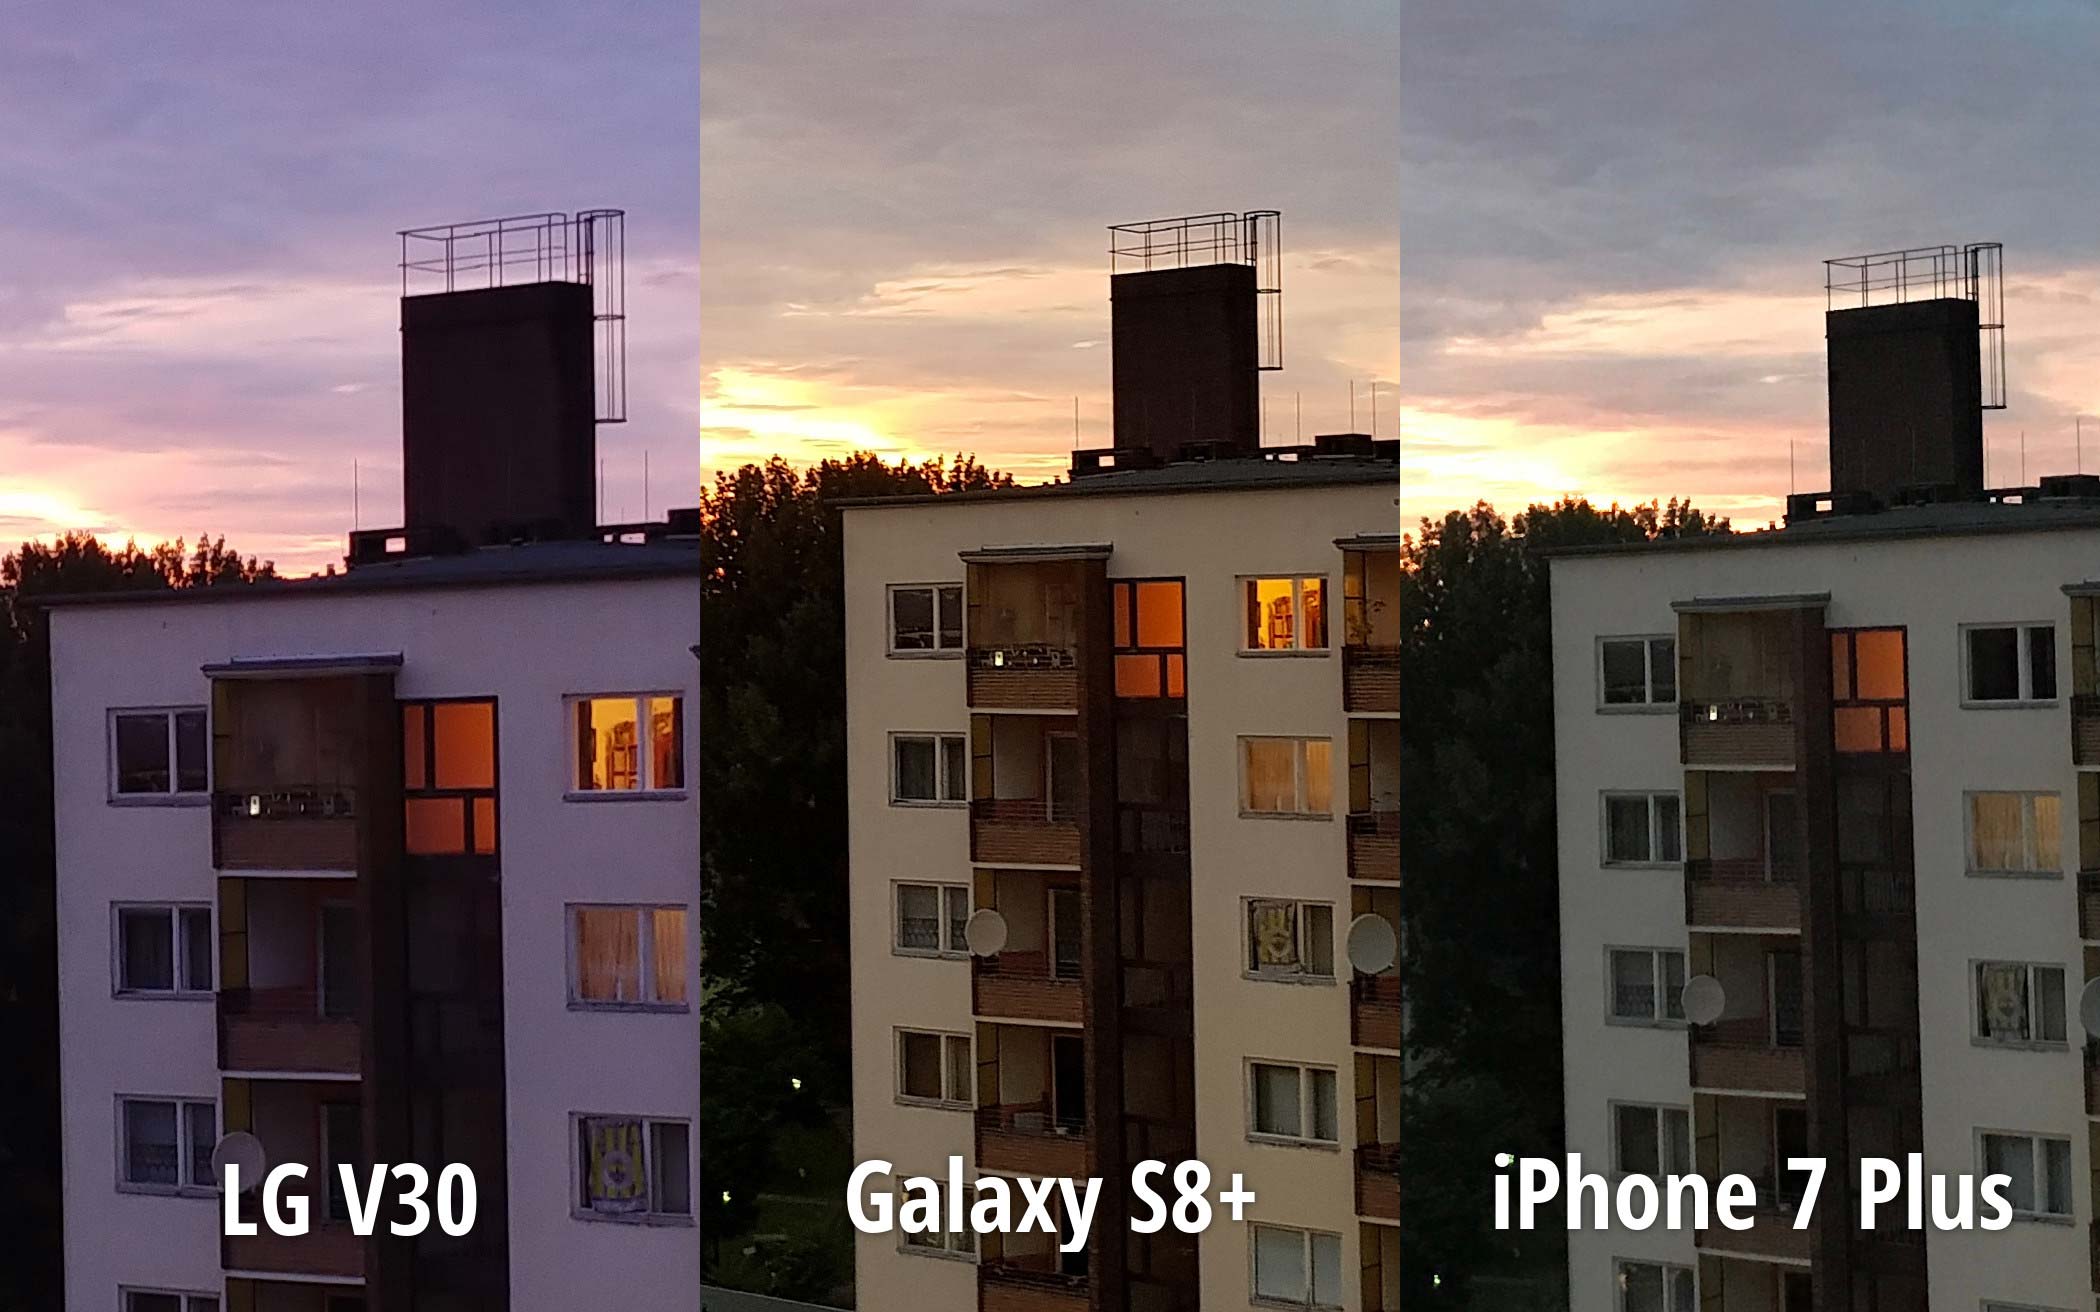 LG-V30-vs-Galaxy-S8-vs-iPhone-7-Plus-camera-photo-samples-(3).jpg